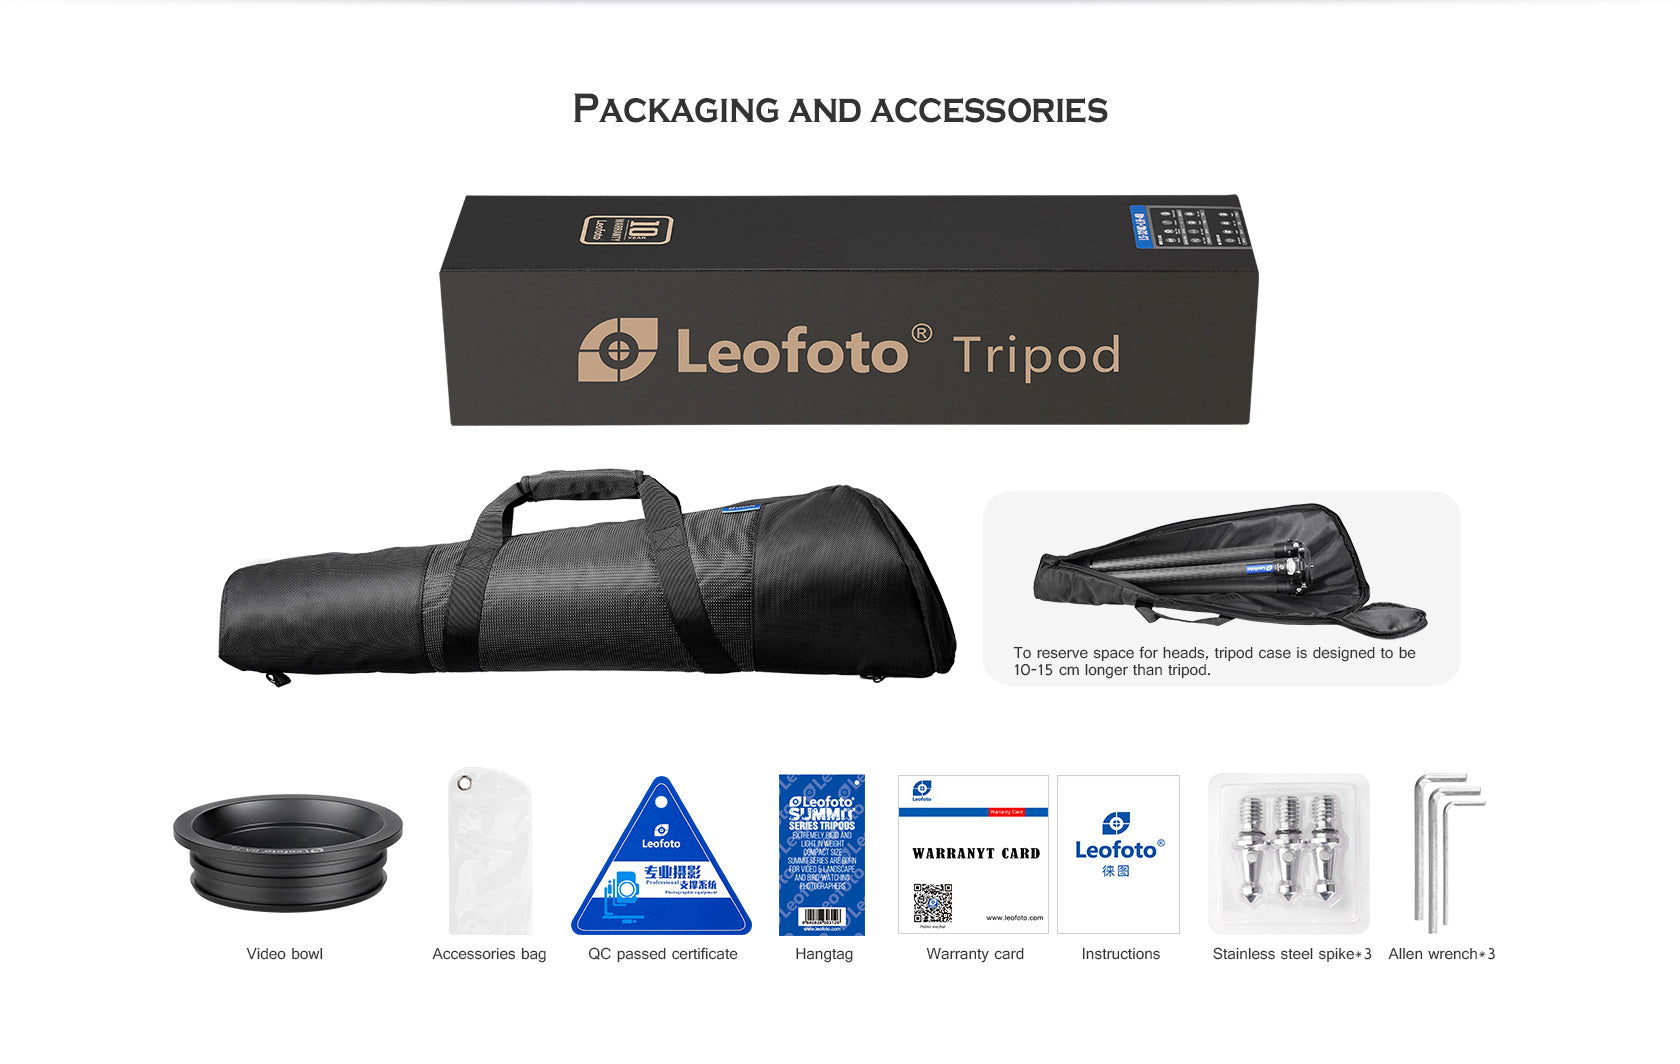 Leofoto LM-365C Tripod with 75mm Video Bowl+Platform and Bag